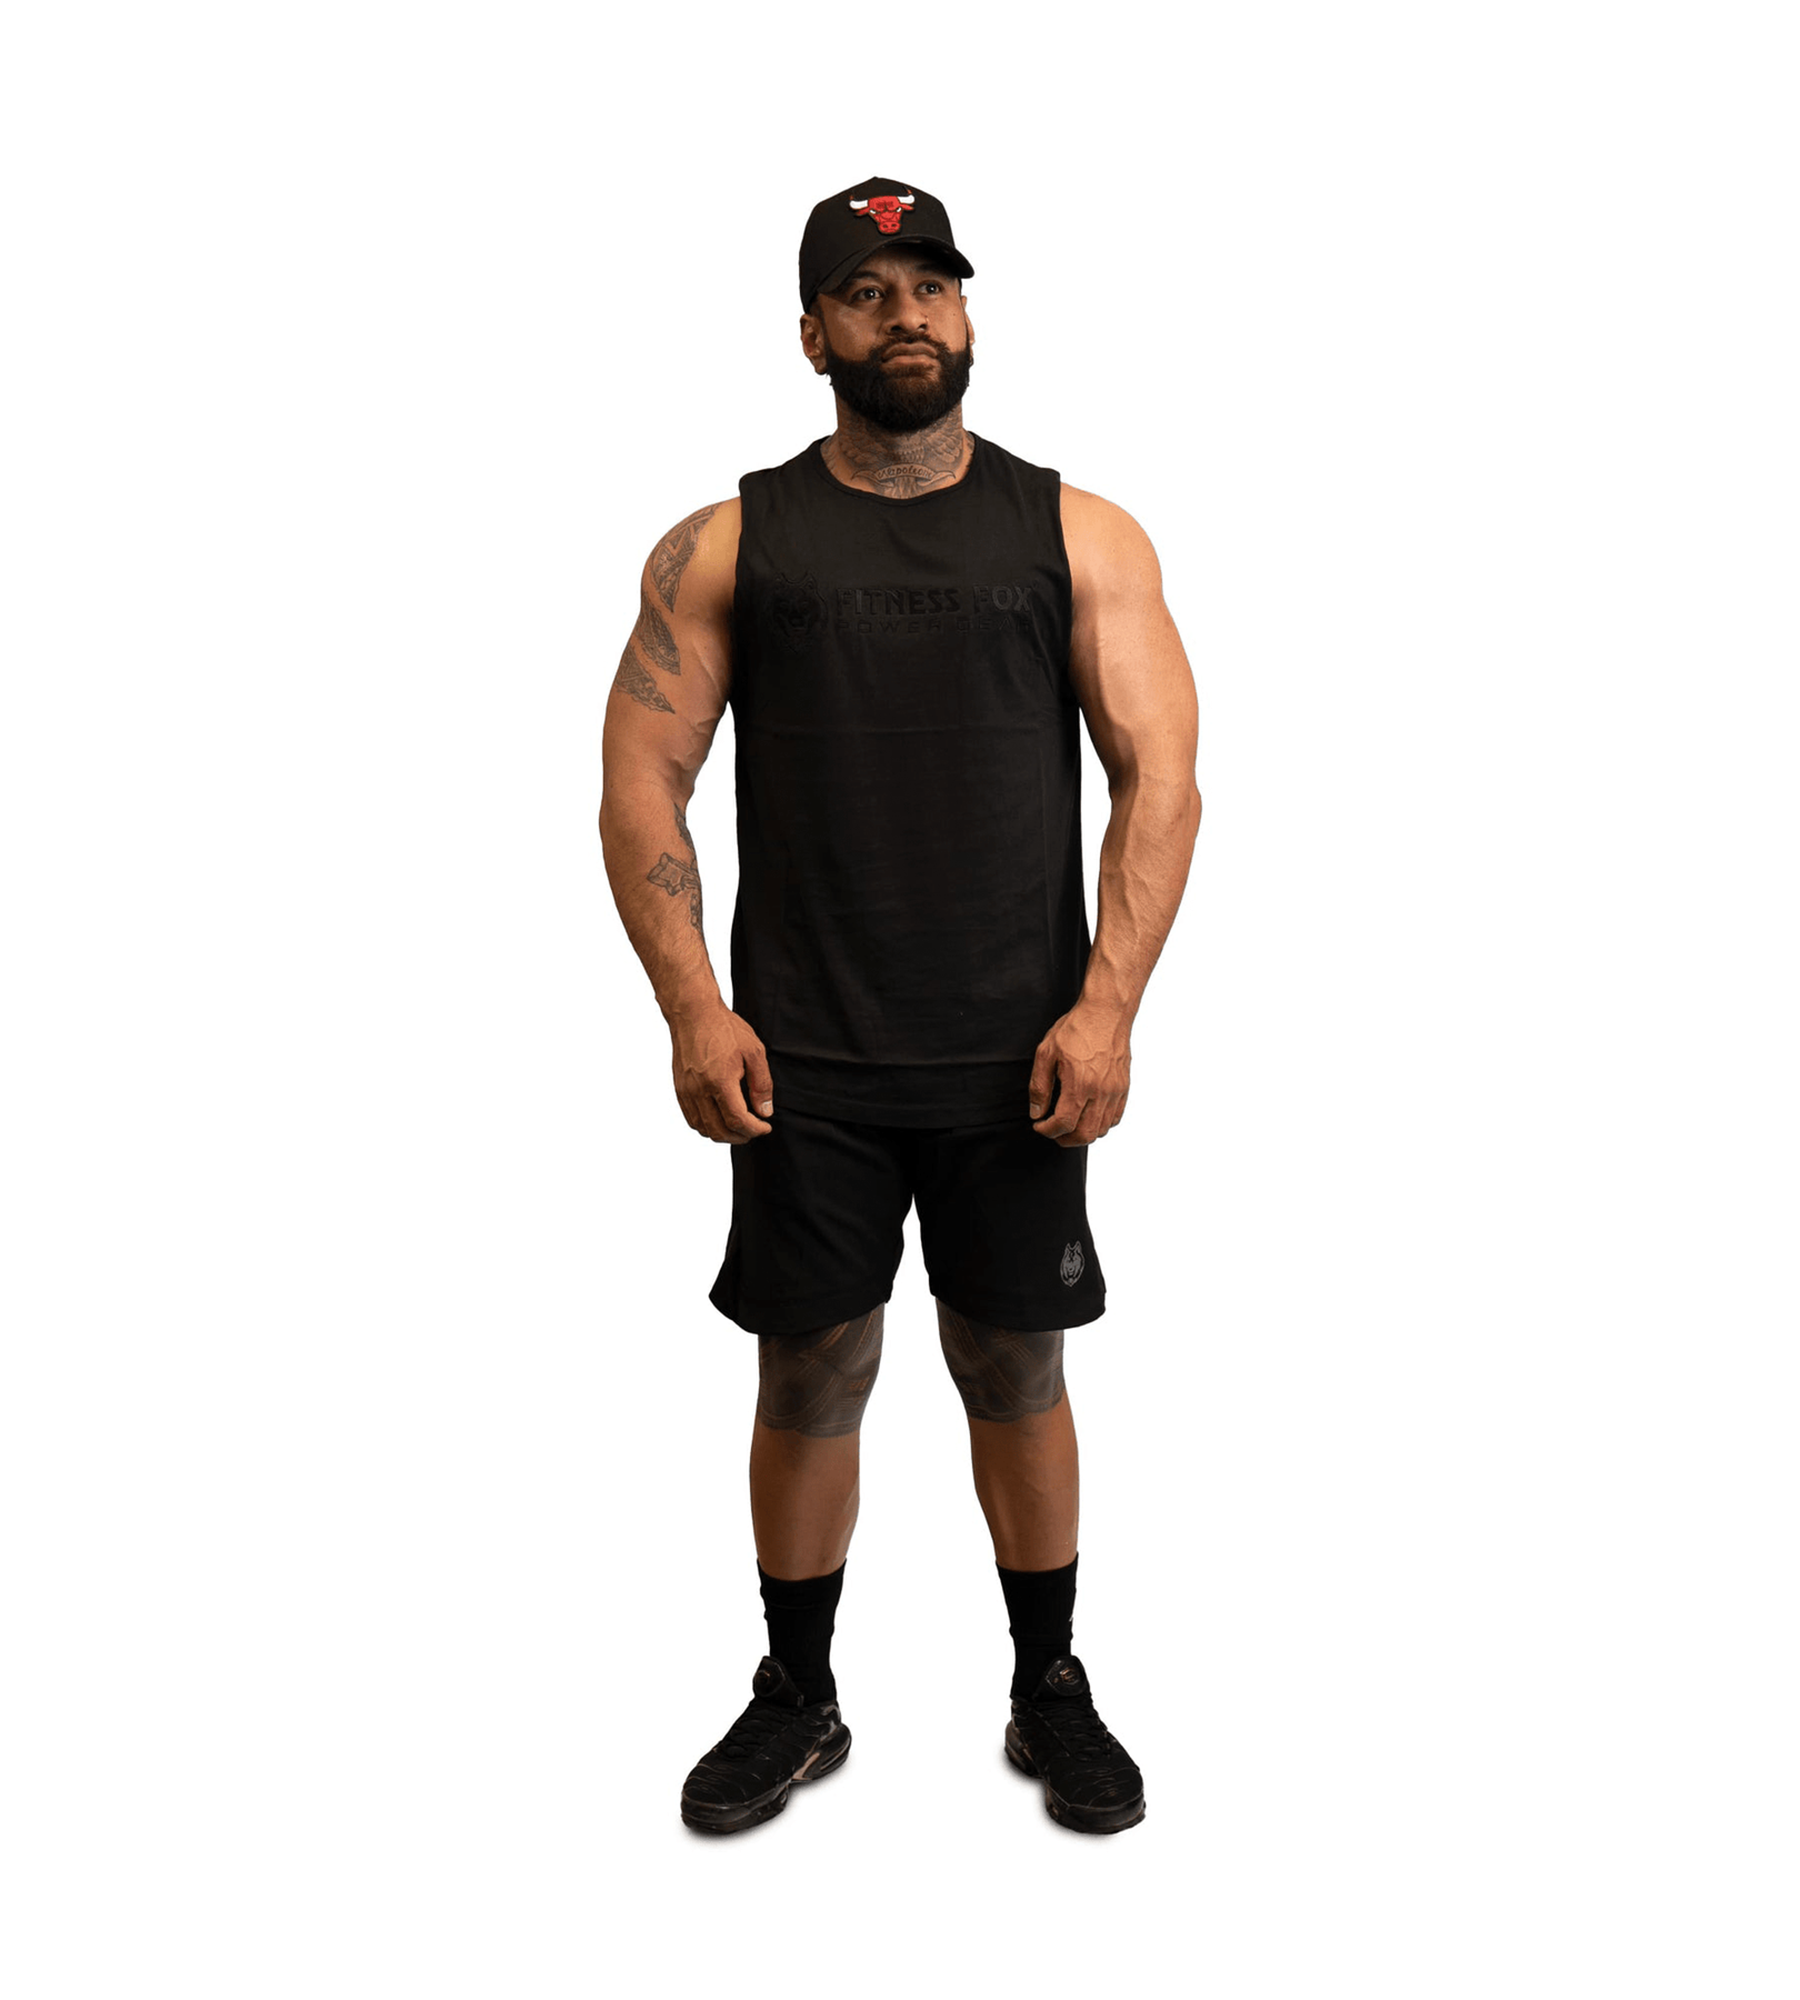 Fitnessfox Exclusive Black UNISEX Shorts